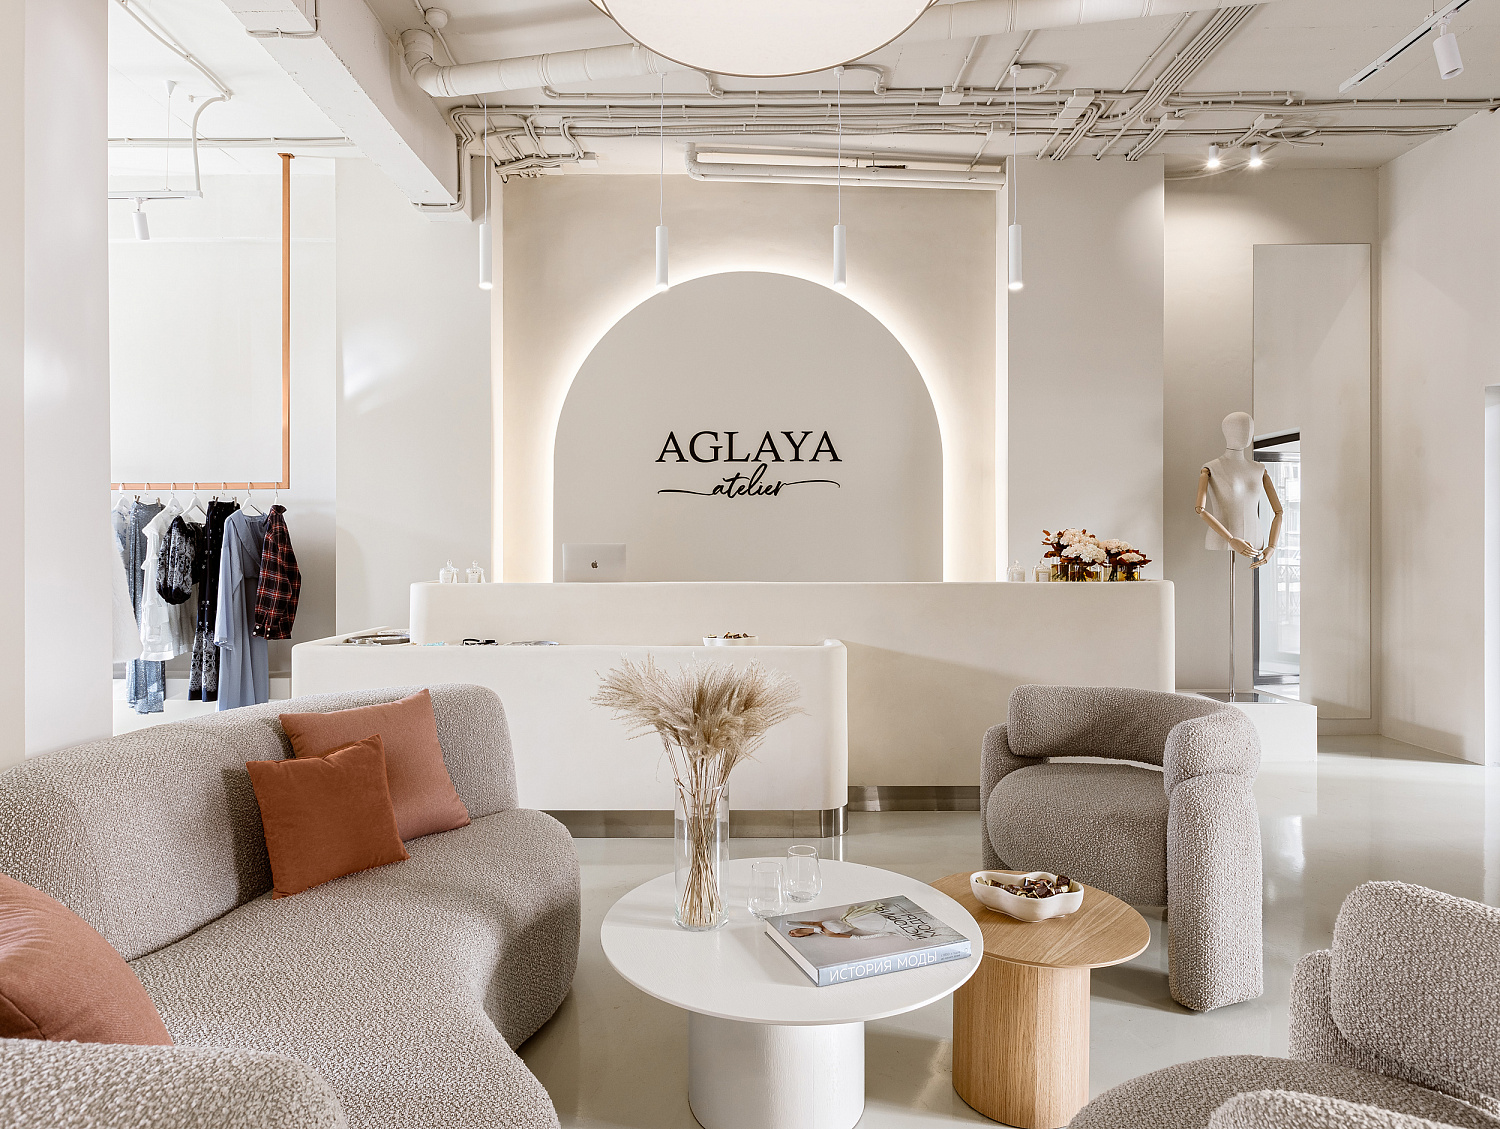 Aglaya Atelier